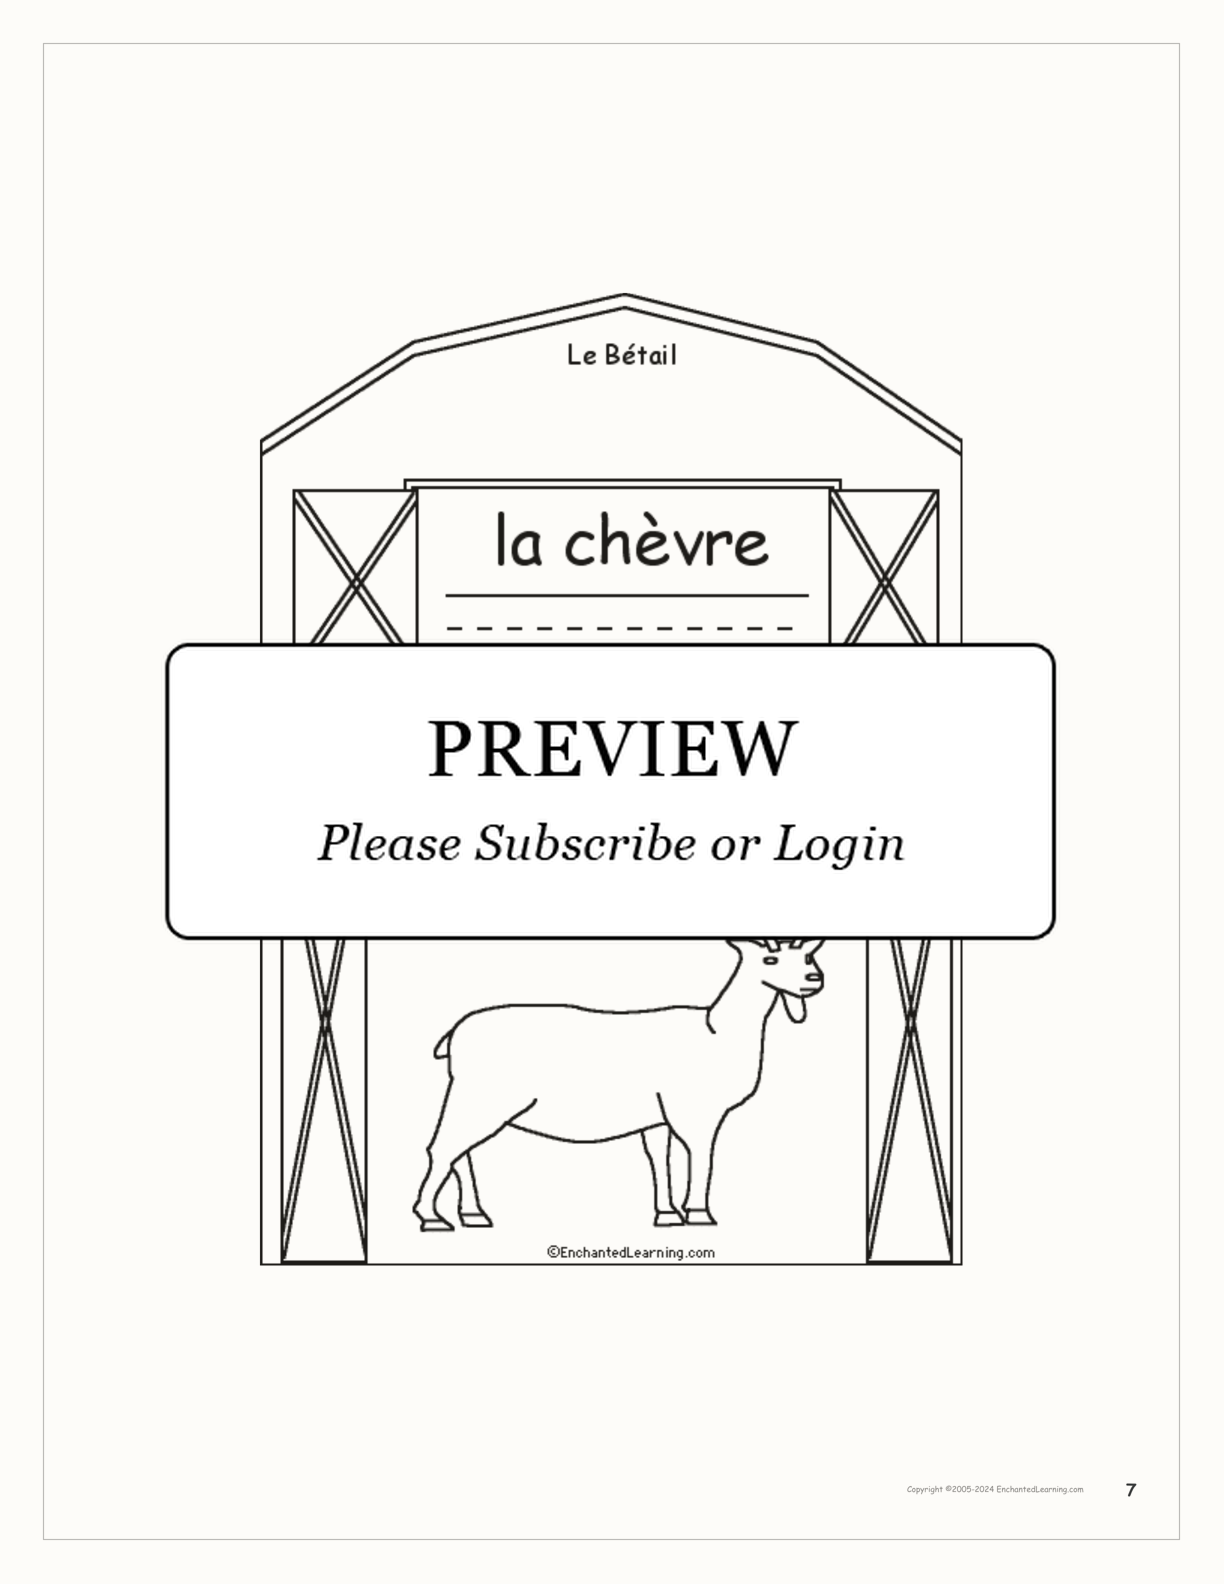 Bétail (Livestock) interactive printout page 7